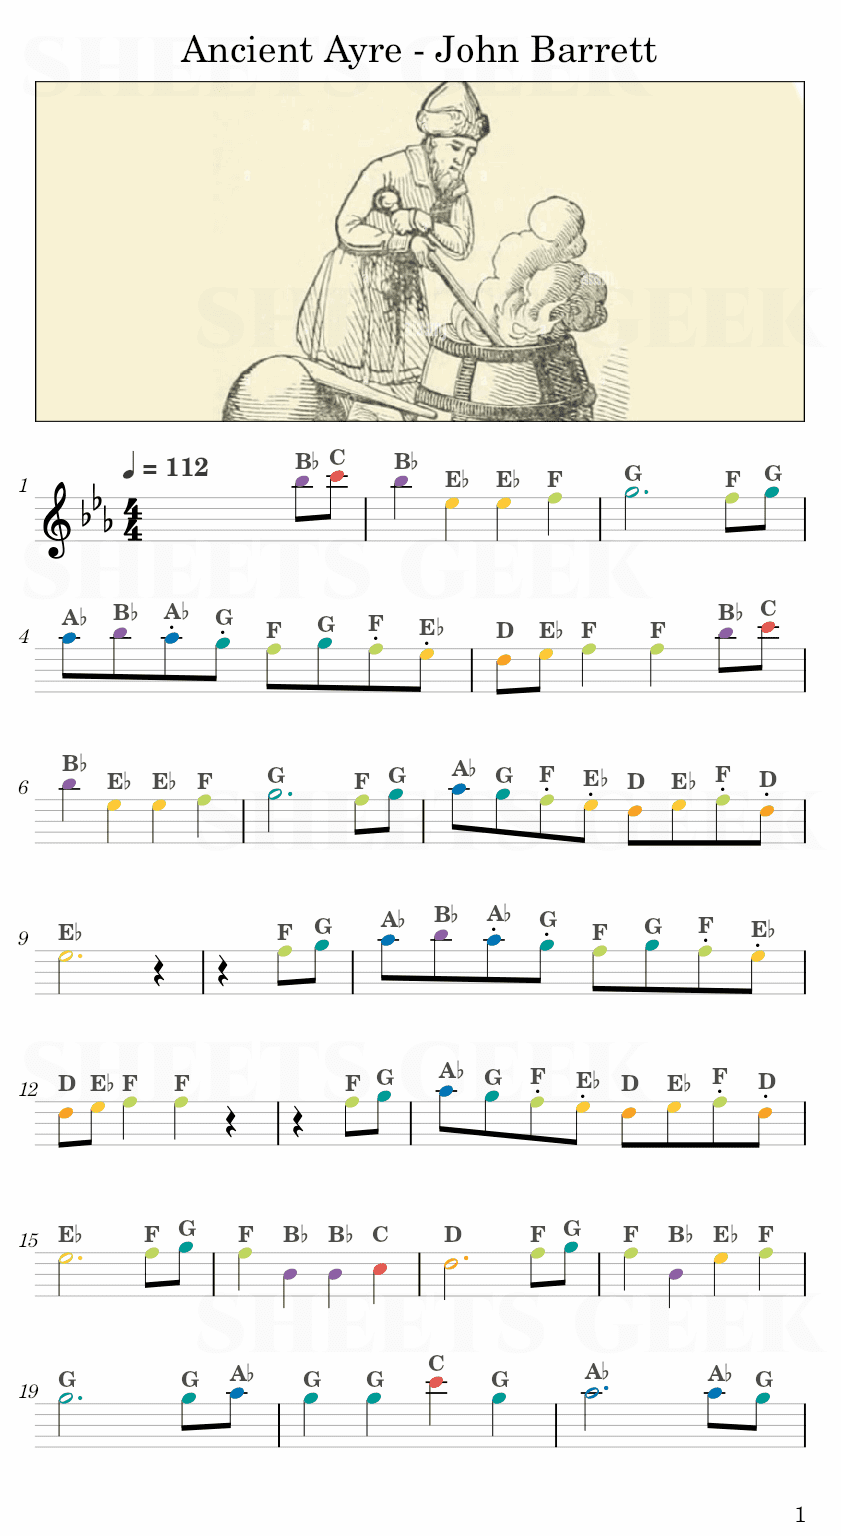 Ancient Ayre - John Barrett Easy Sheet Music Free for piano, keyboard, flute, violin, sax, cello page 1